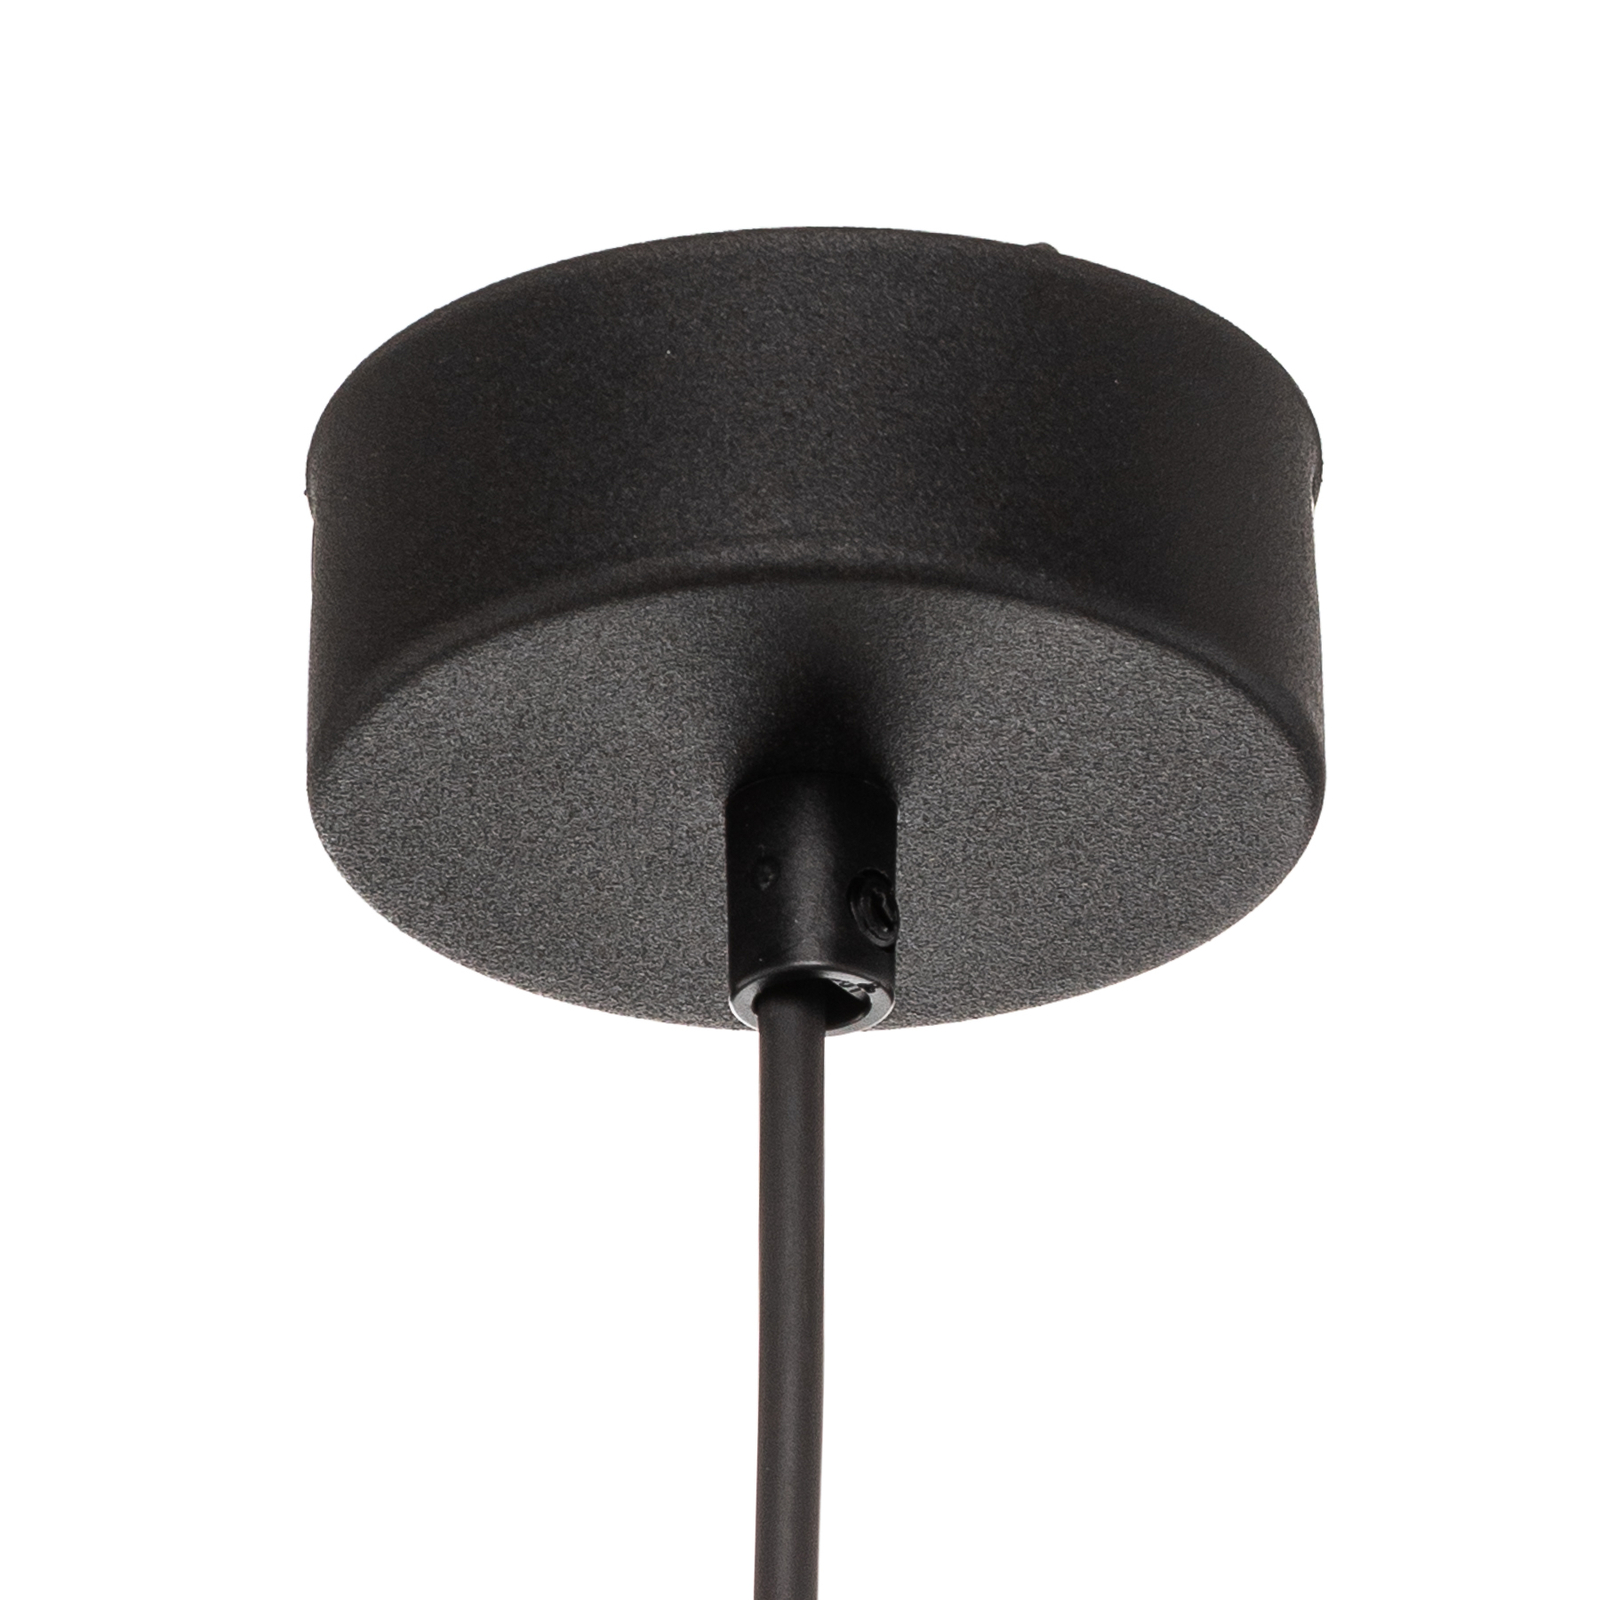 Maxi hanglamp met glazen kap, 1-lamp Ø 30cm